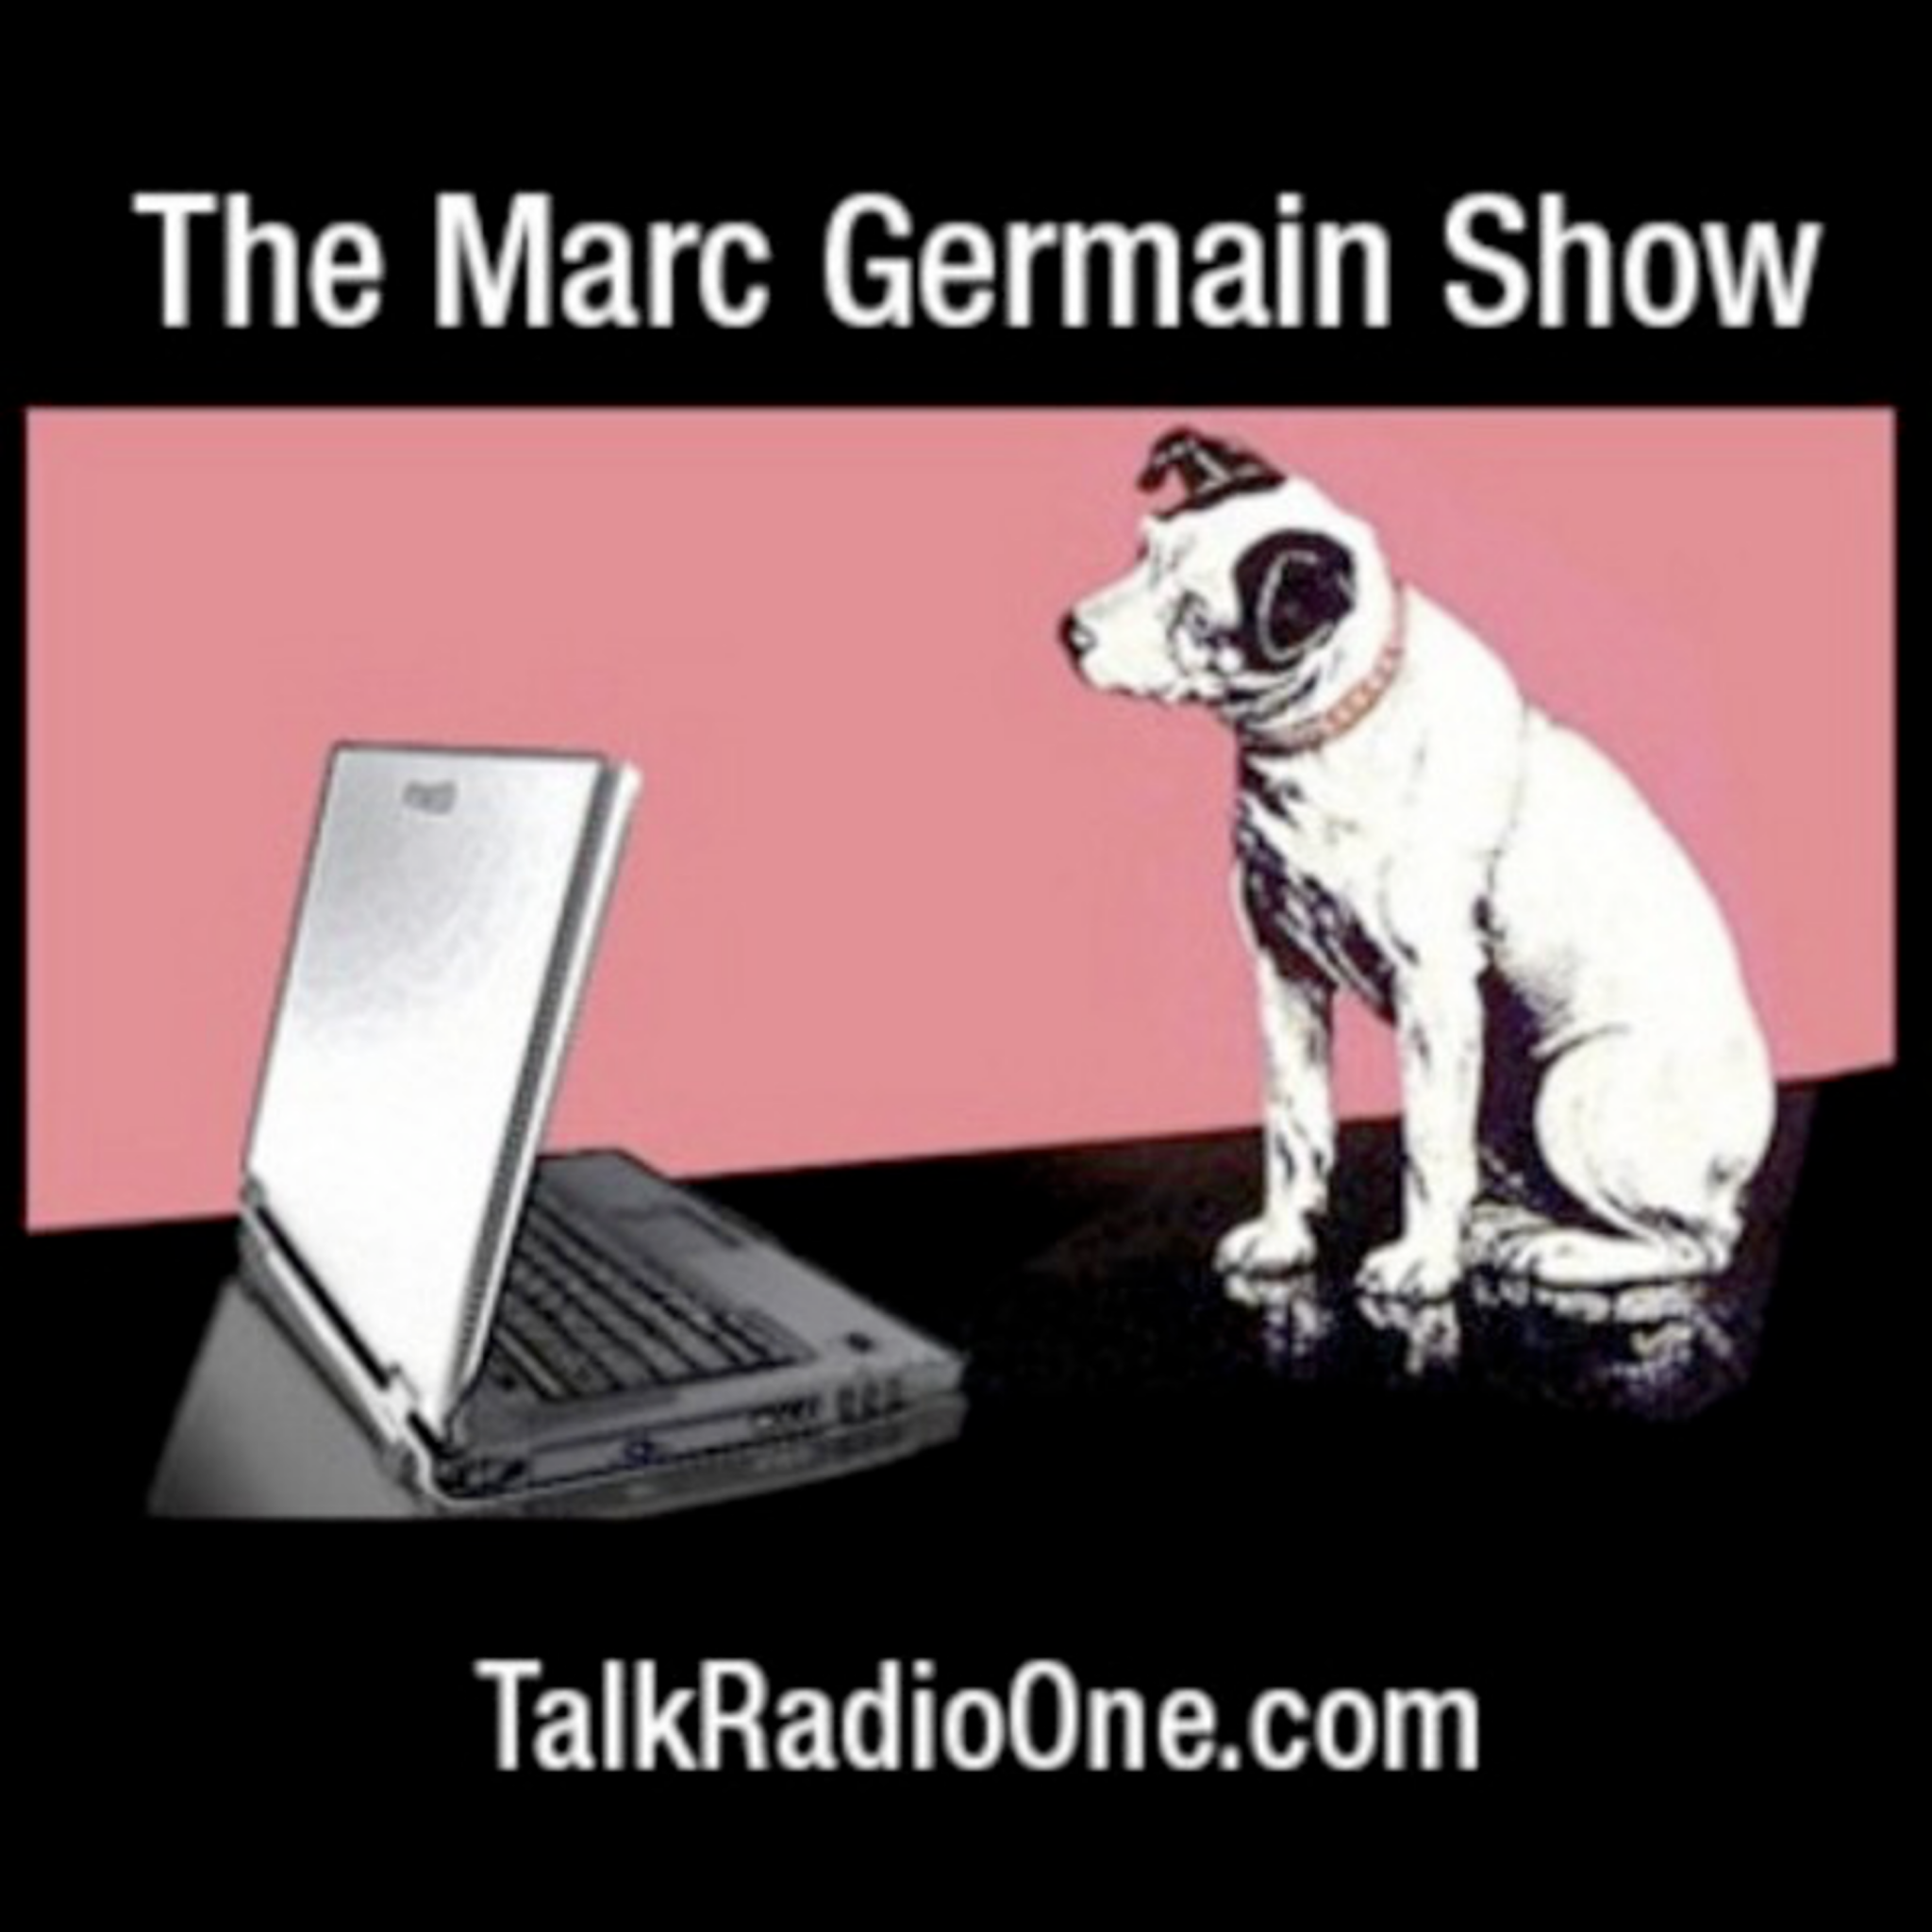 The Marc Germain Show - TalkRadioOne